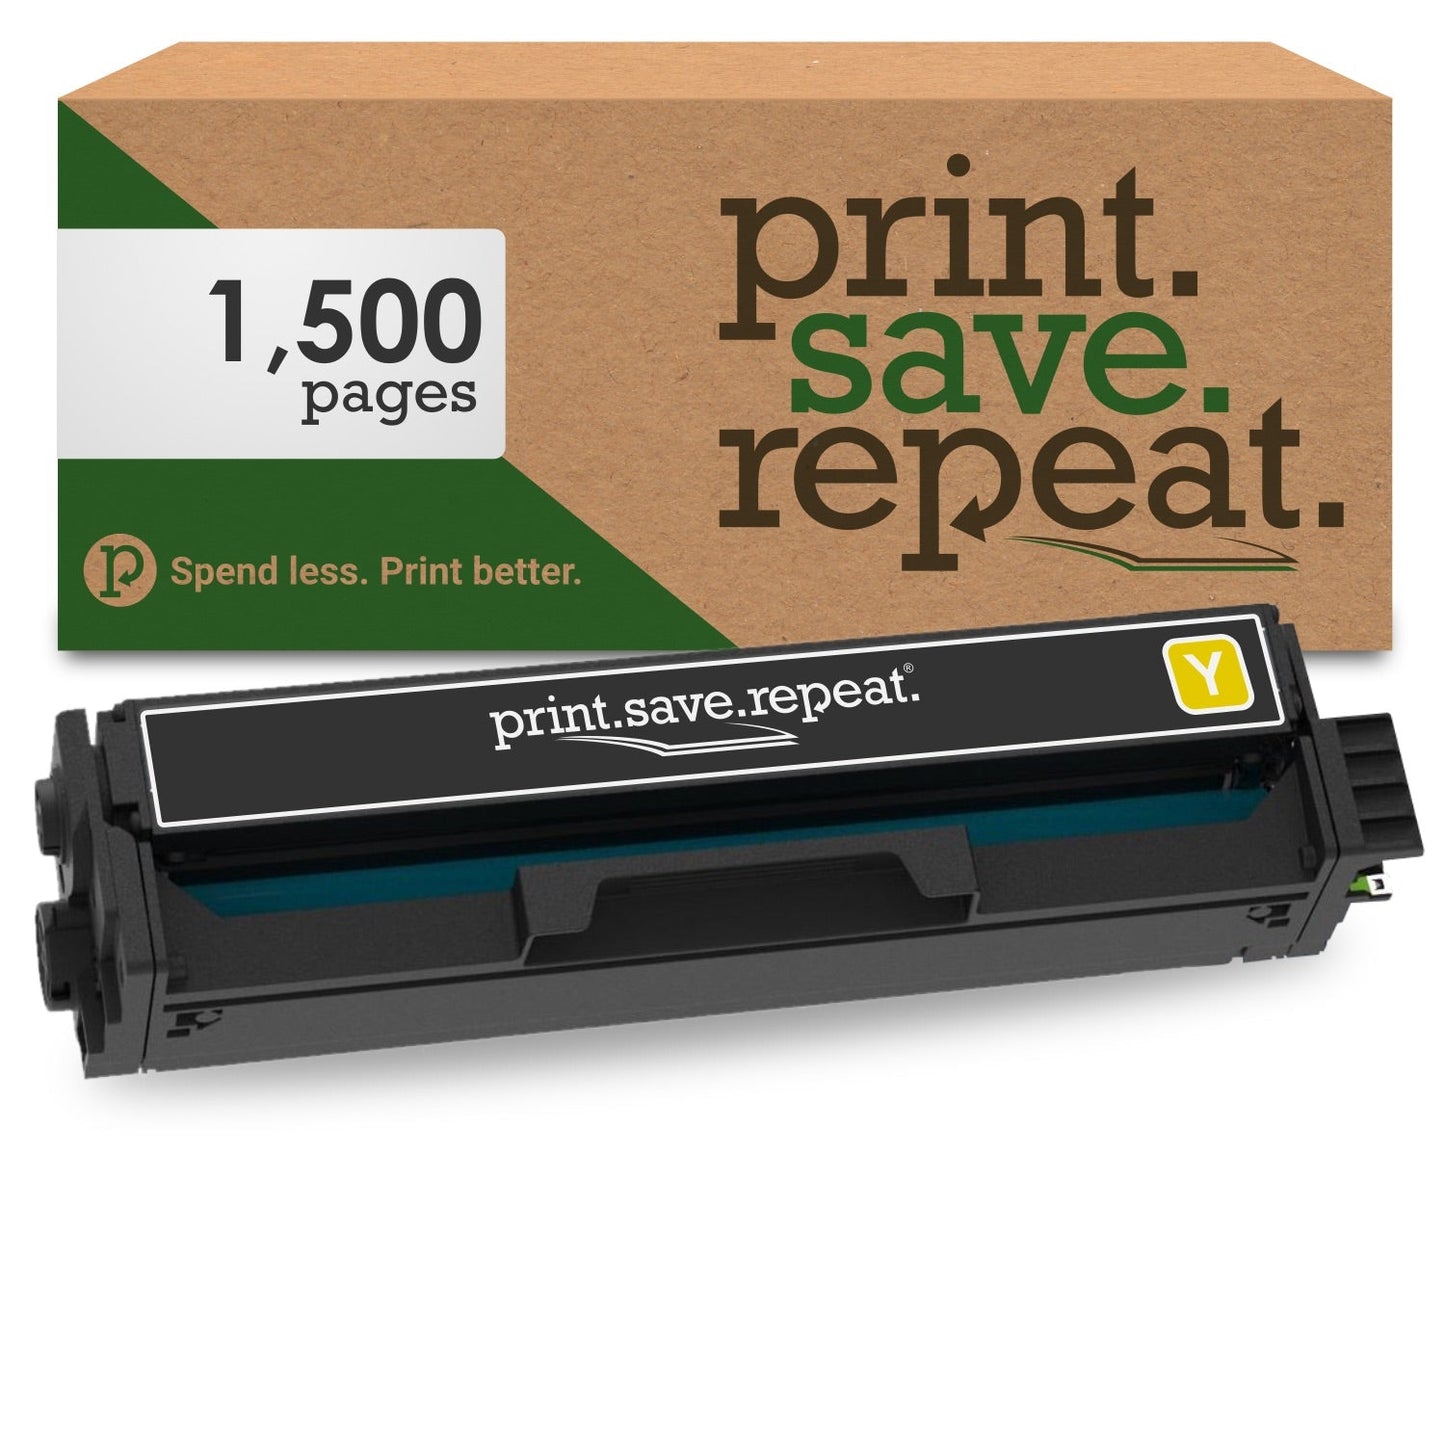 Print.Save.Repeat. Lexmark C3210Y0 Yellow Remanfuactured Toner Cartridge for C3224, C3326, MC3224, MC3326 [1,500 Pages]